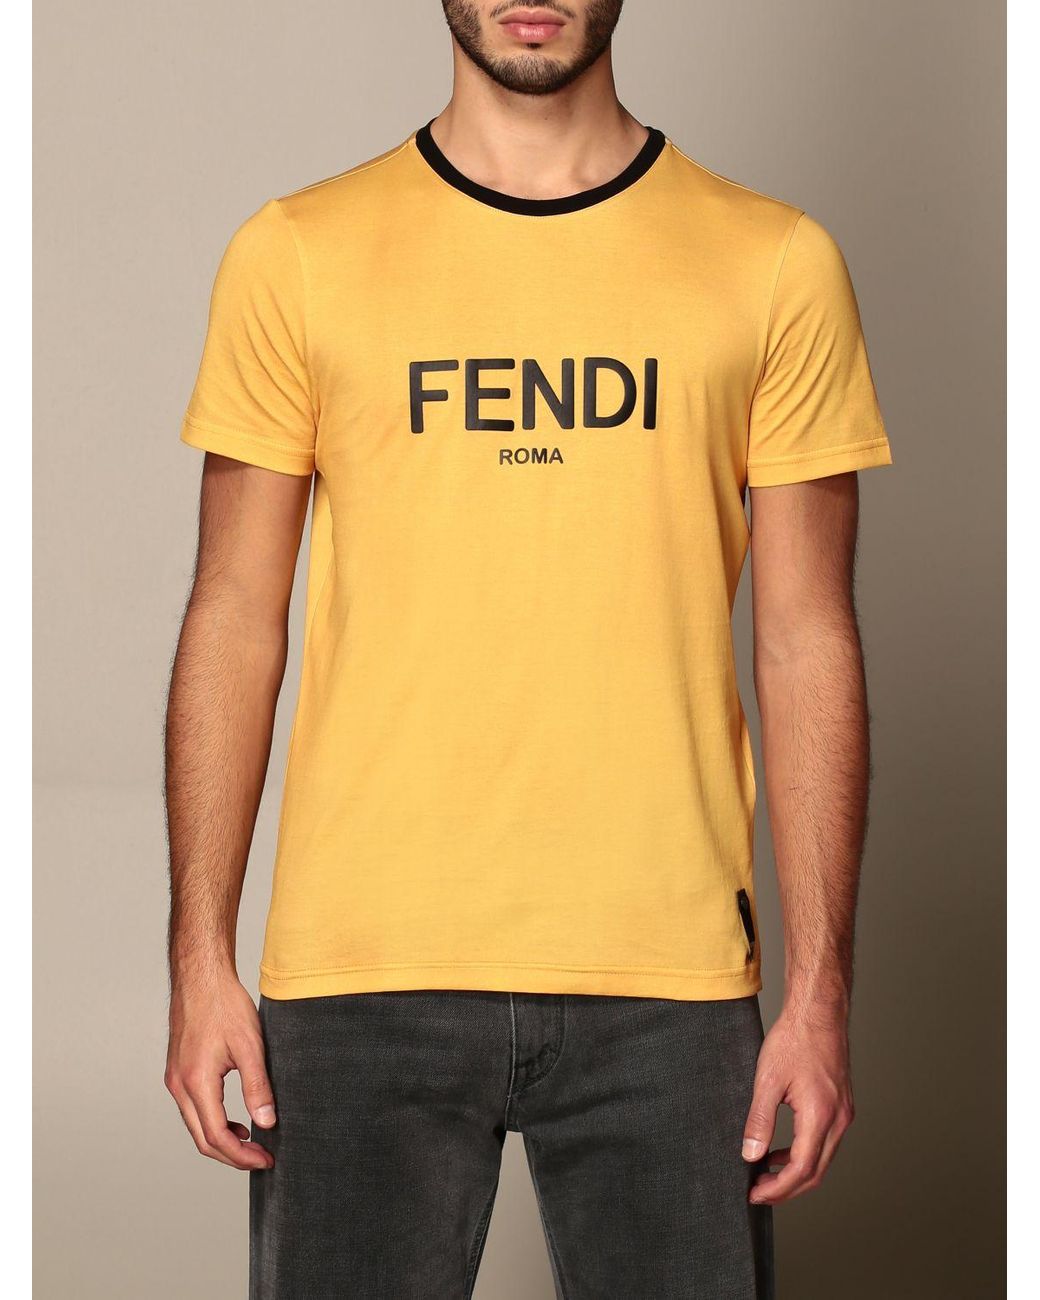 Fendi T-shirt in Yellow for Men - Lyst